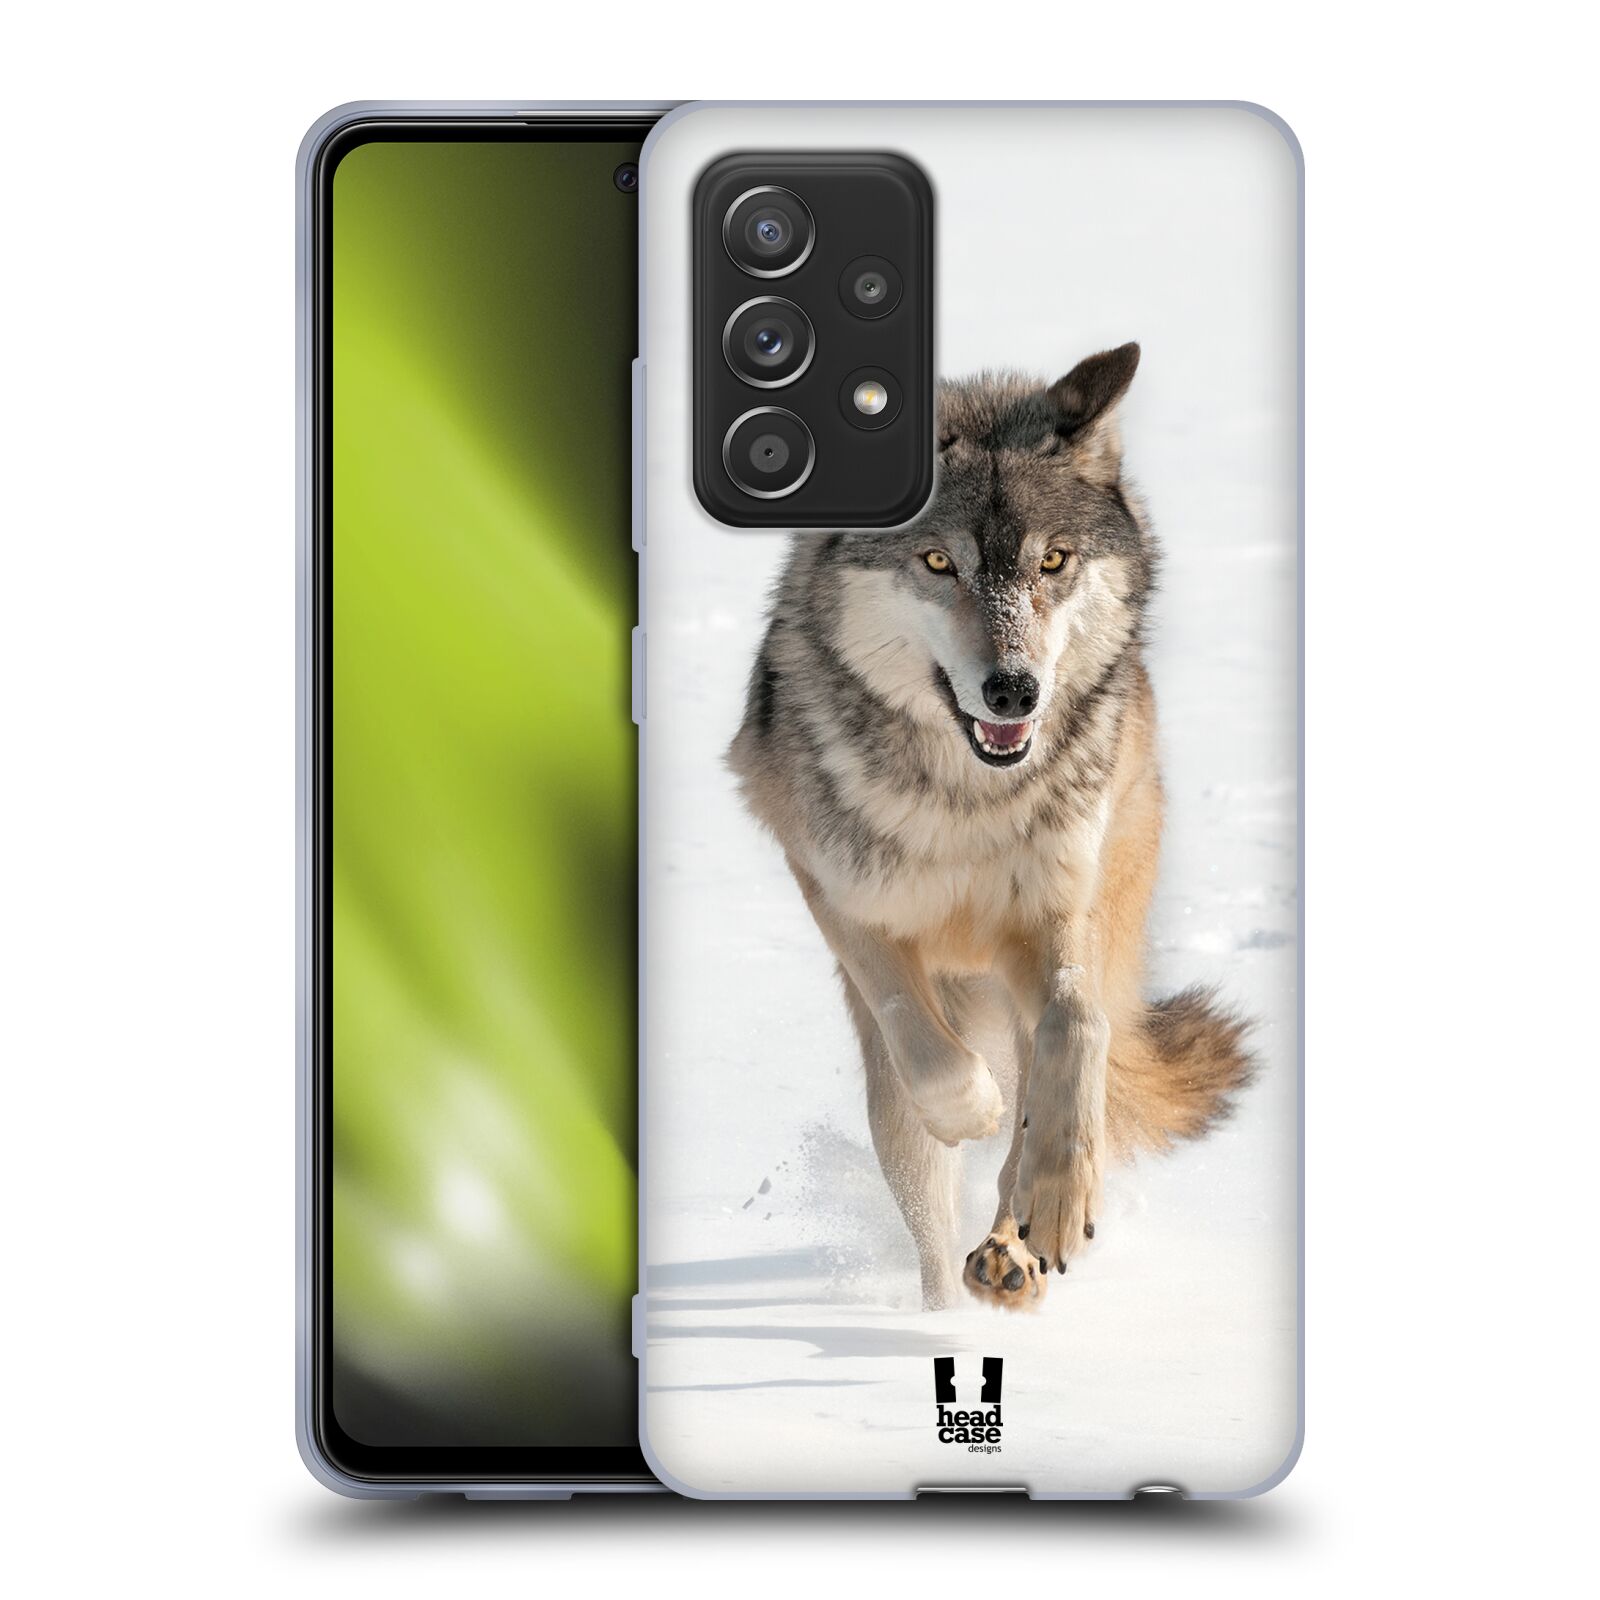 Plastový obal HEAD CASE na mobil Samsung Galaxy A52 / A52 5G / A52s 5G vzor Divočina, Divoký život a zvířata foto BĚŽÍCÍ VLK